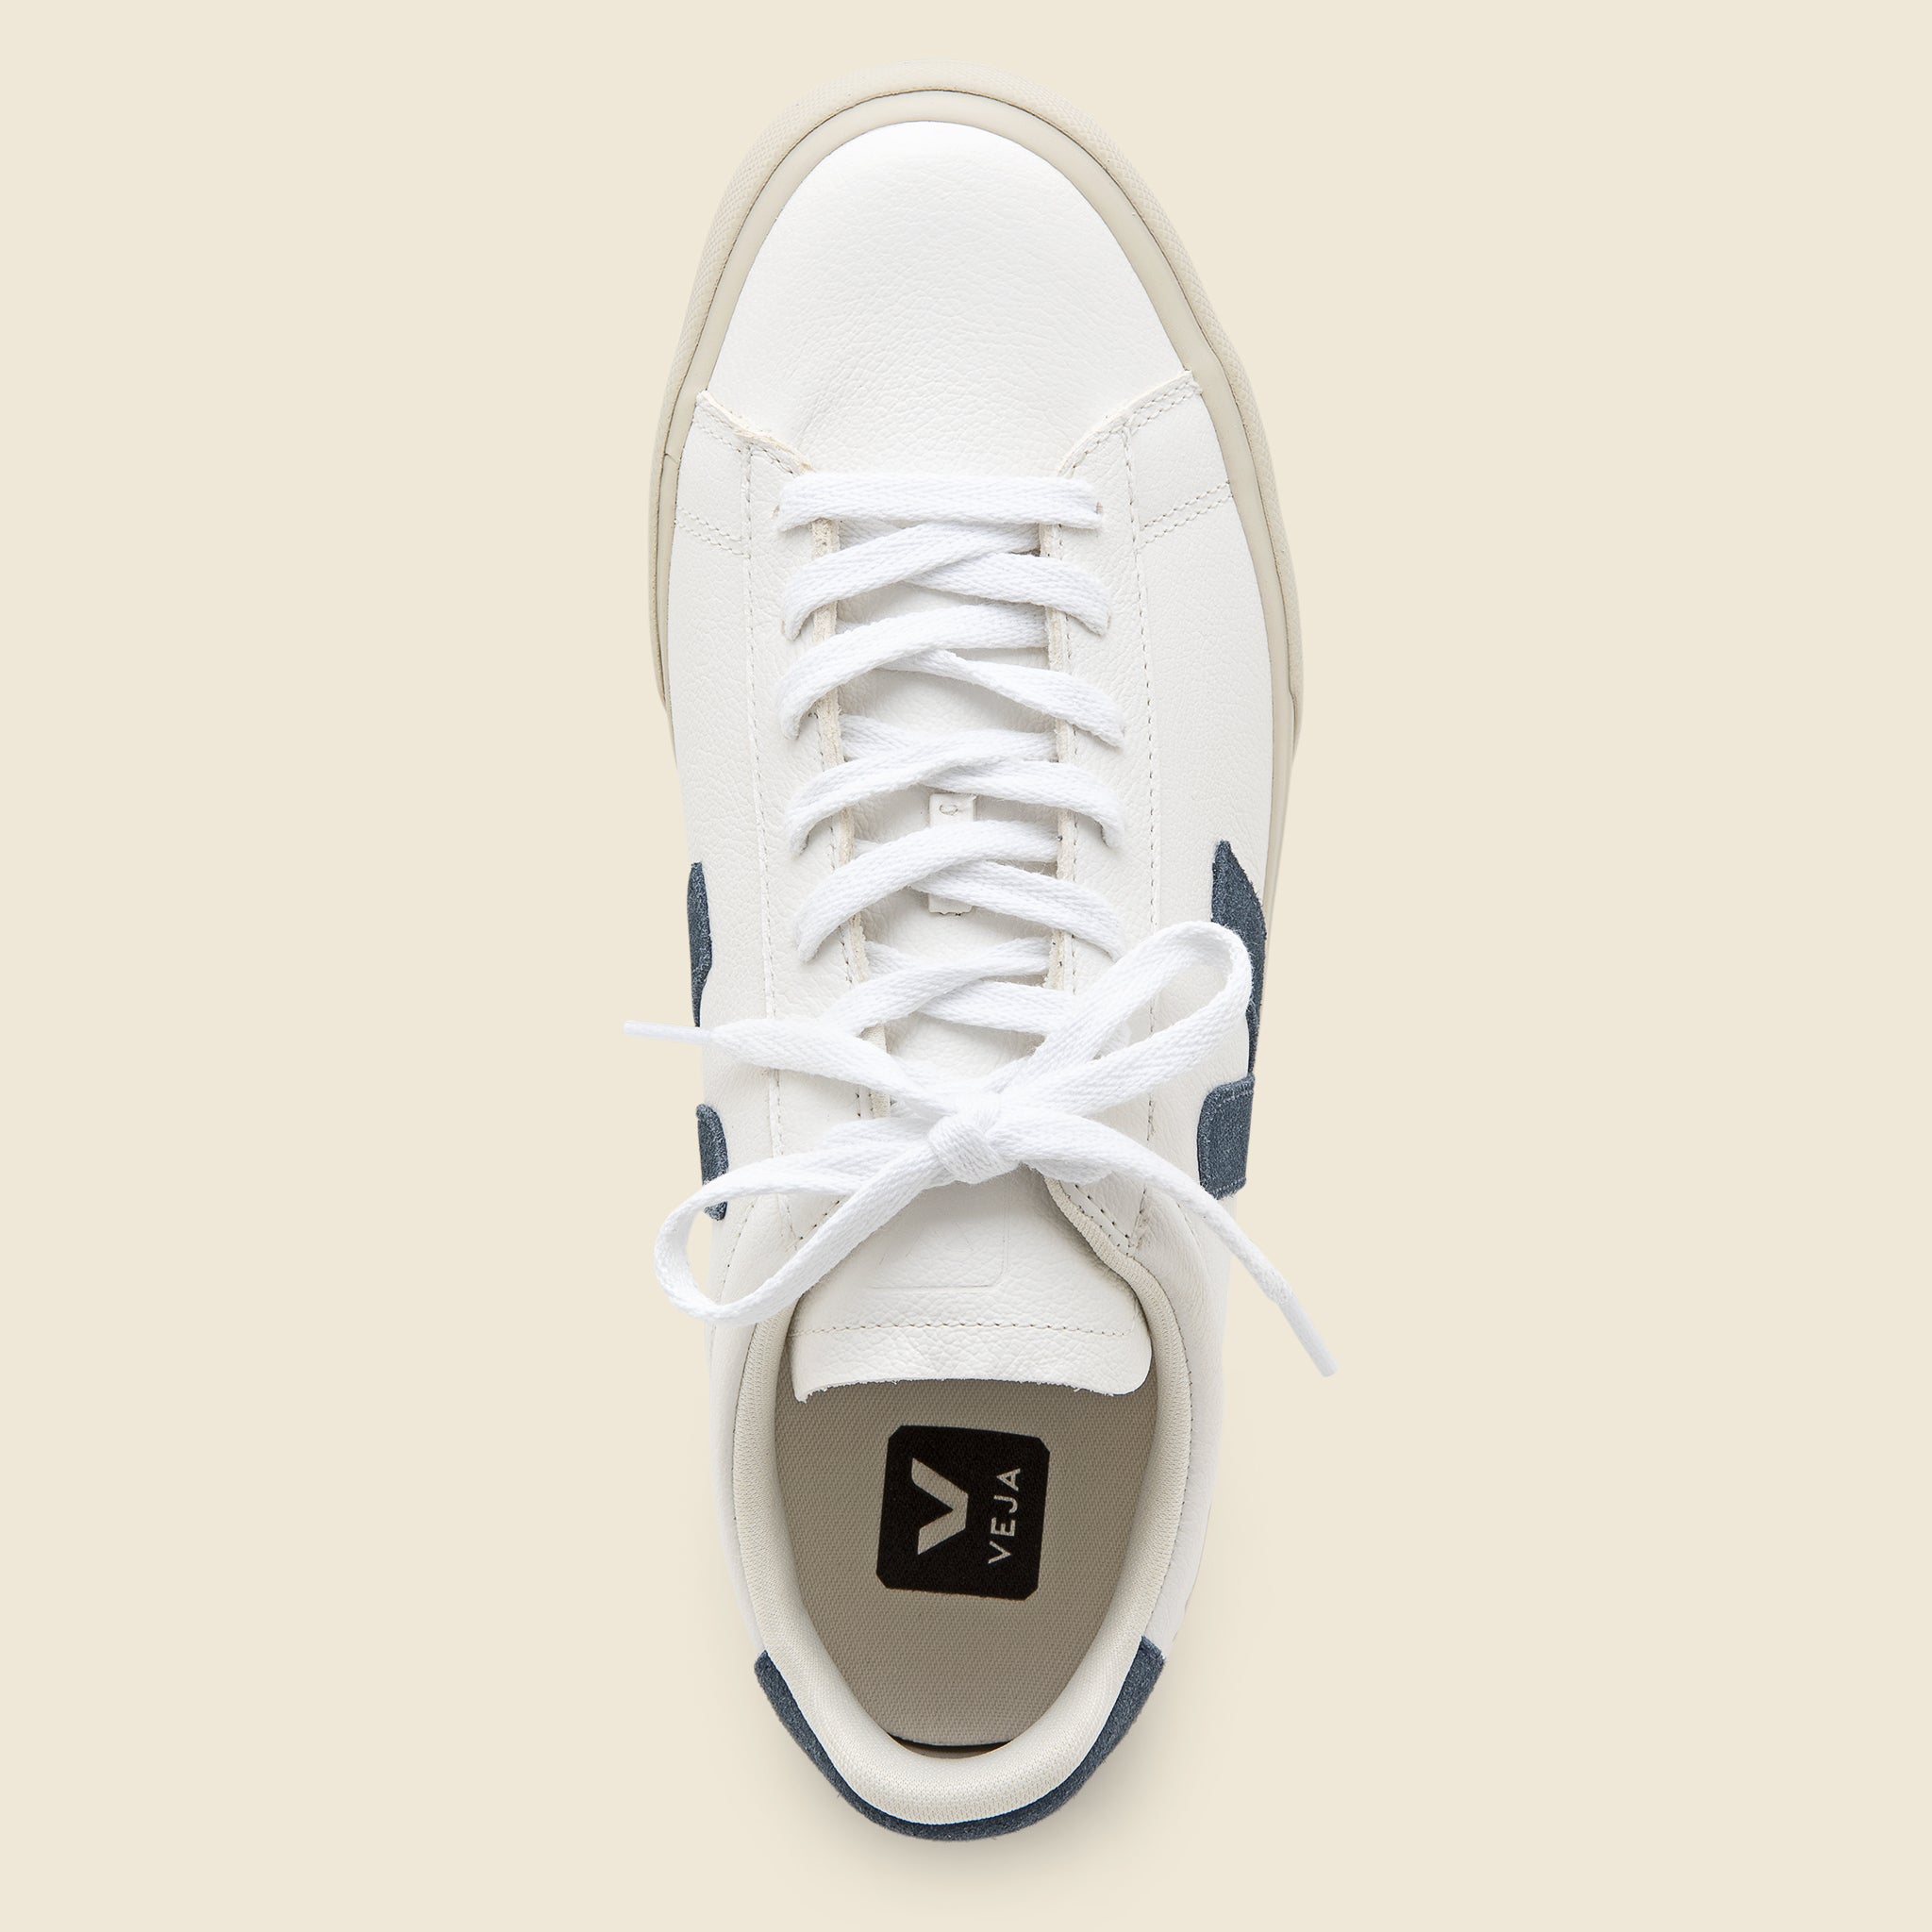 Veja, Campo Leather Sneaker - Extra White/California Blue